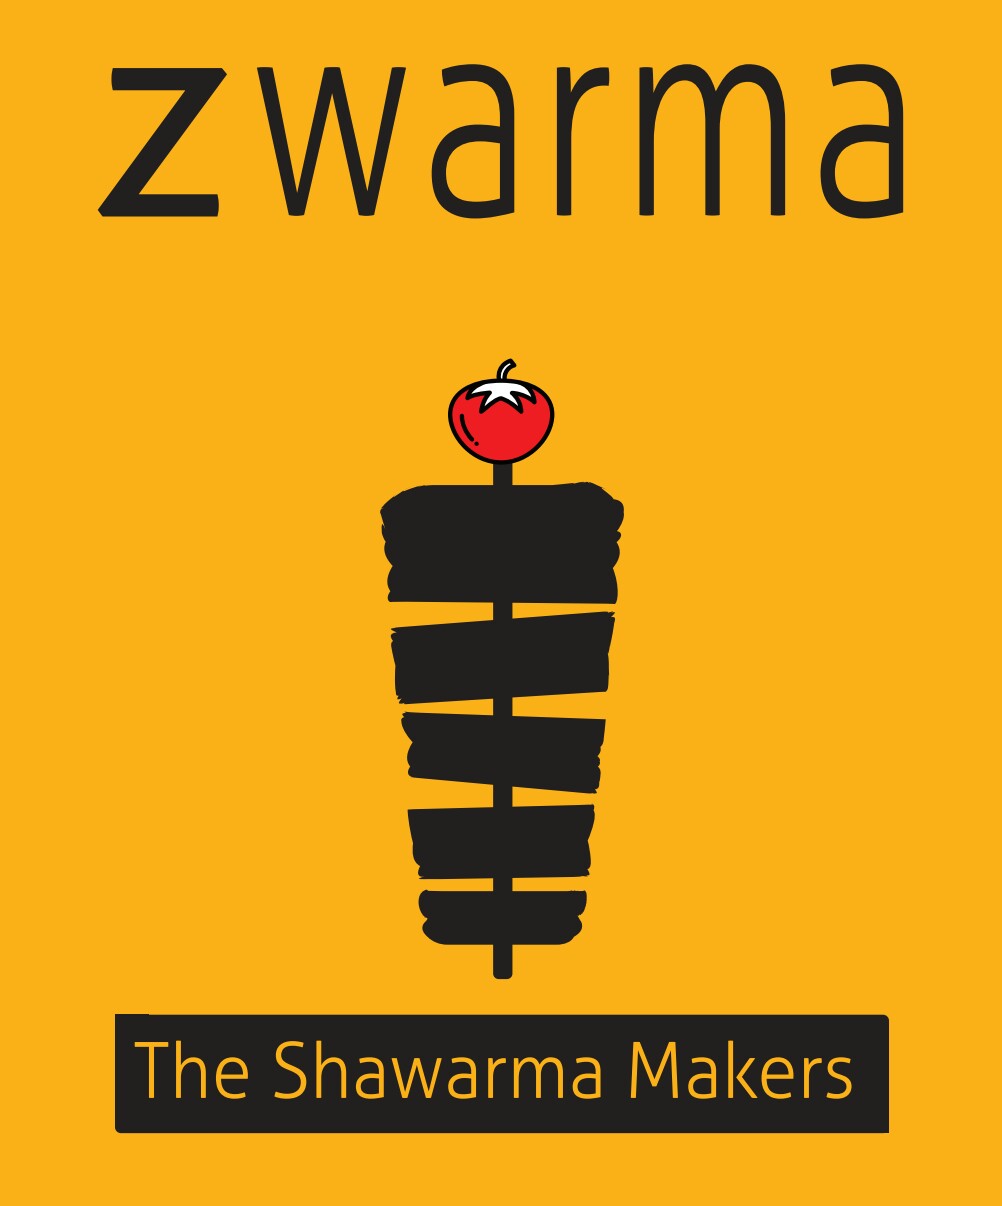 Zwarma - The Shawarma Makers logo